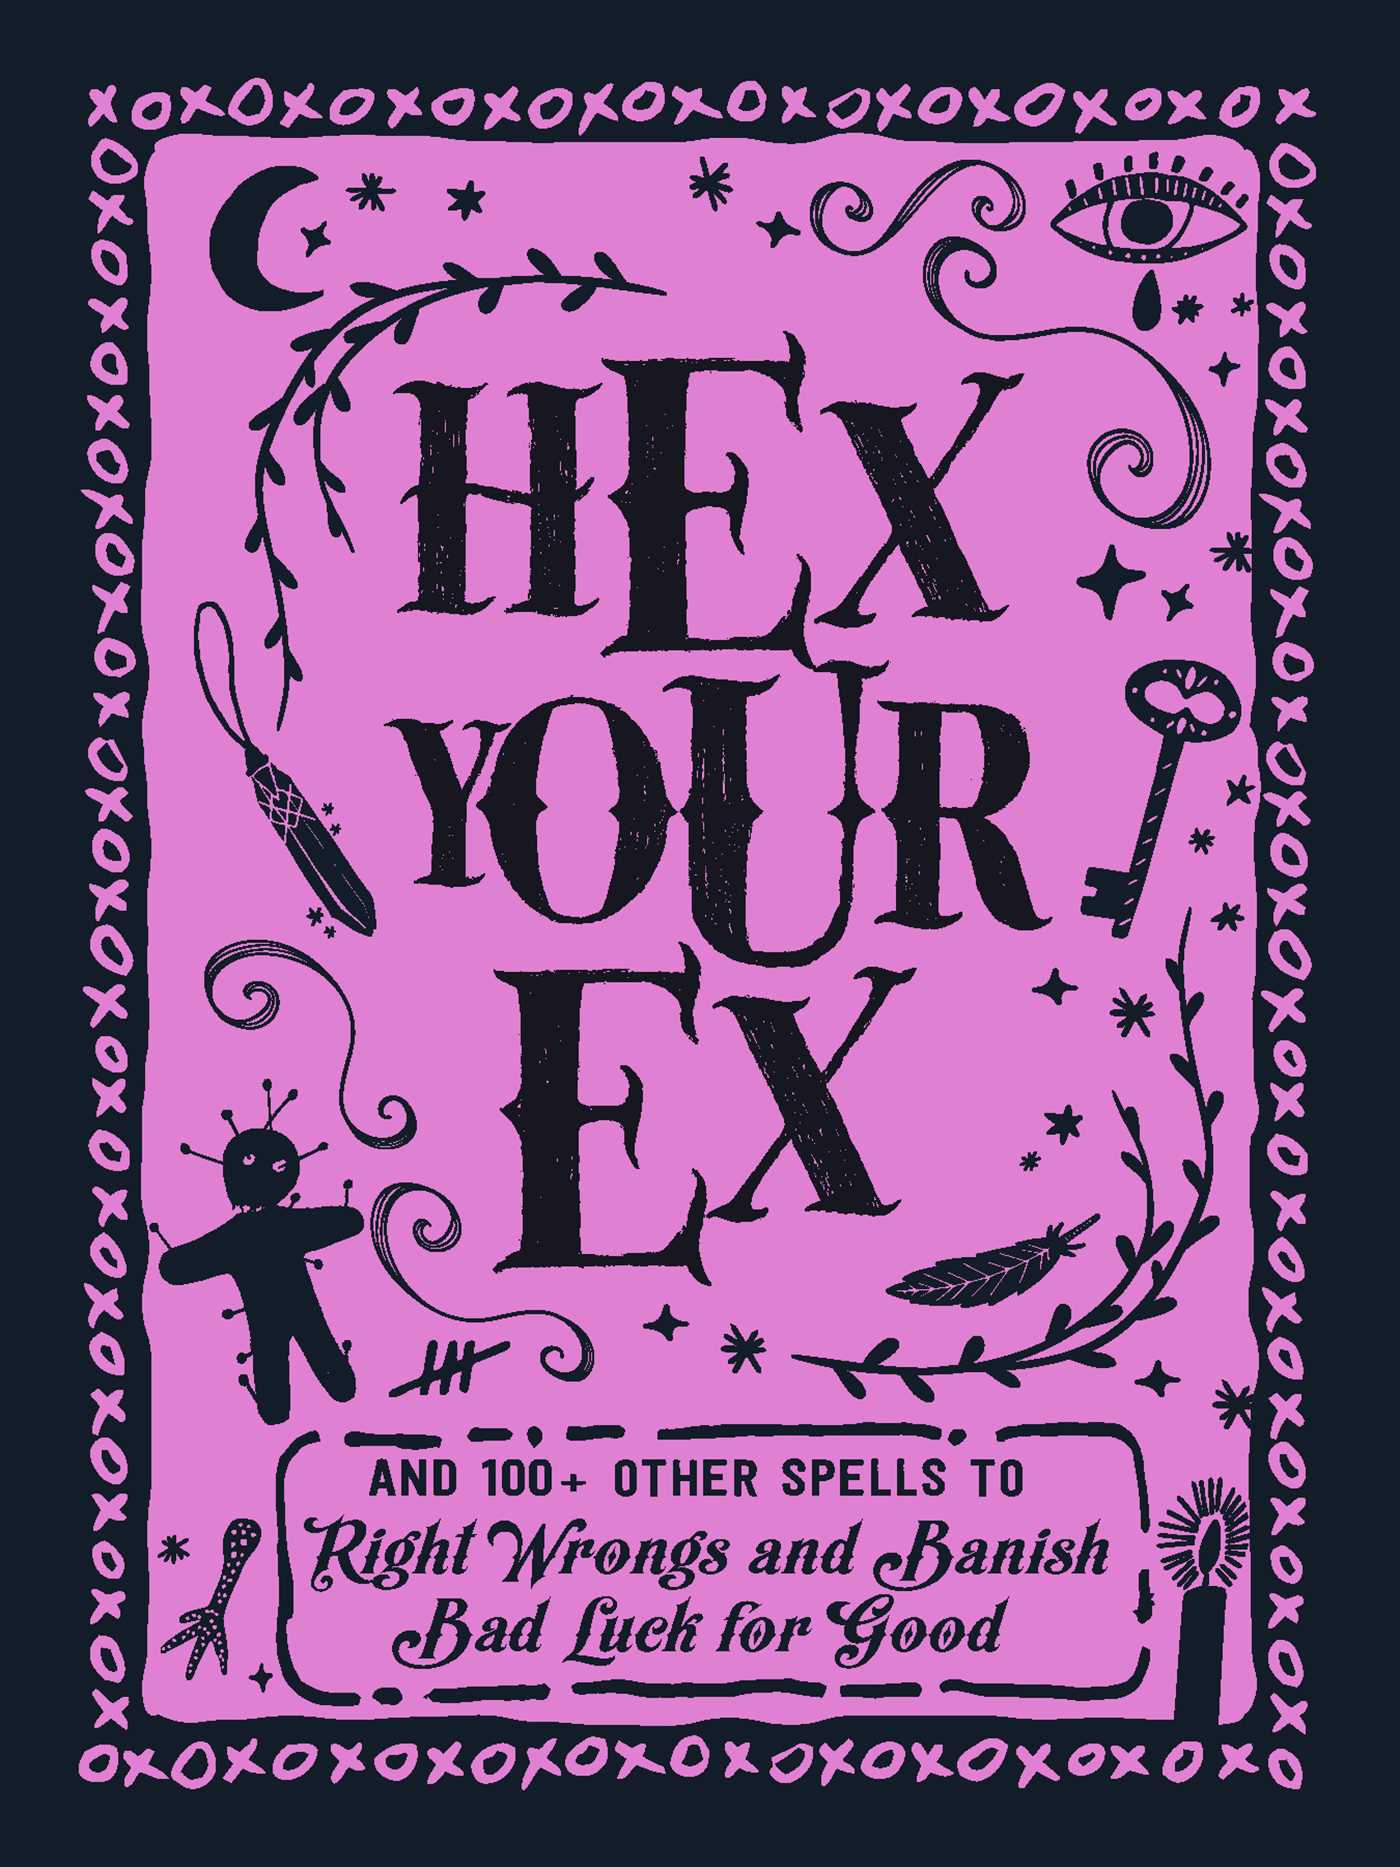 Hex Your Ex Book